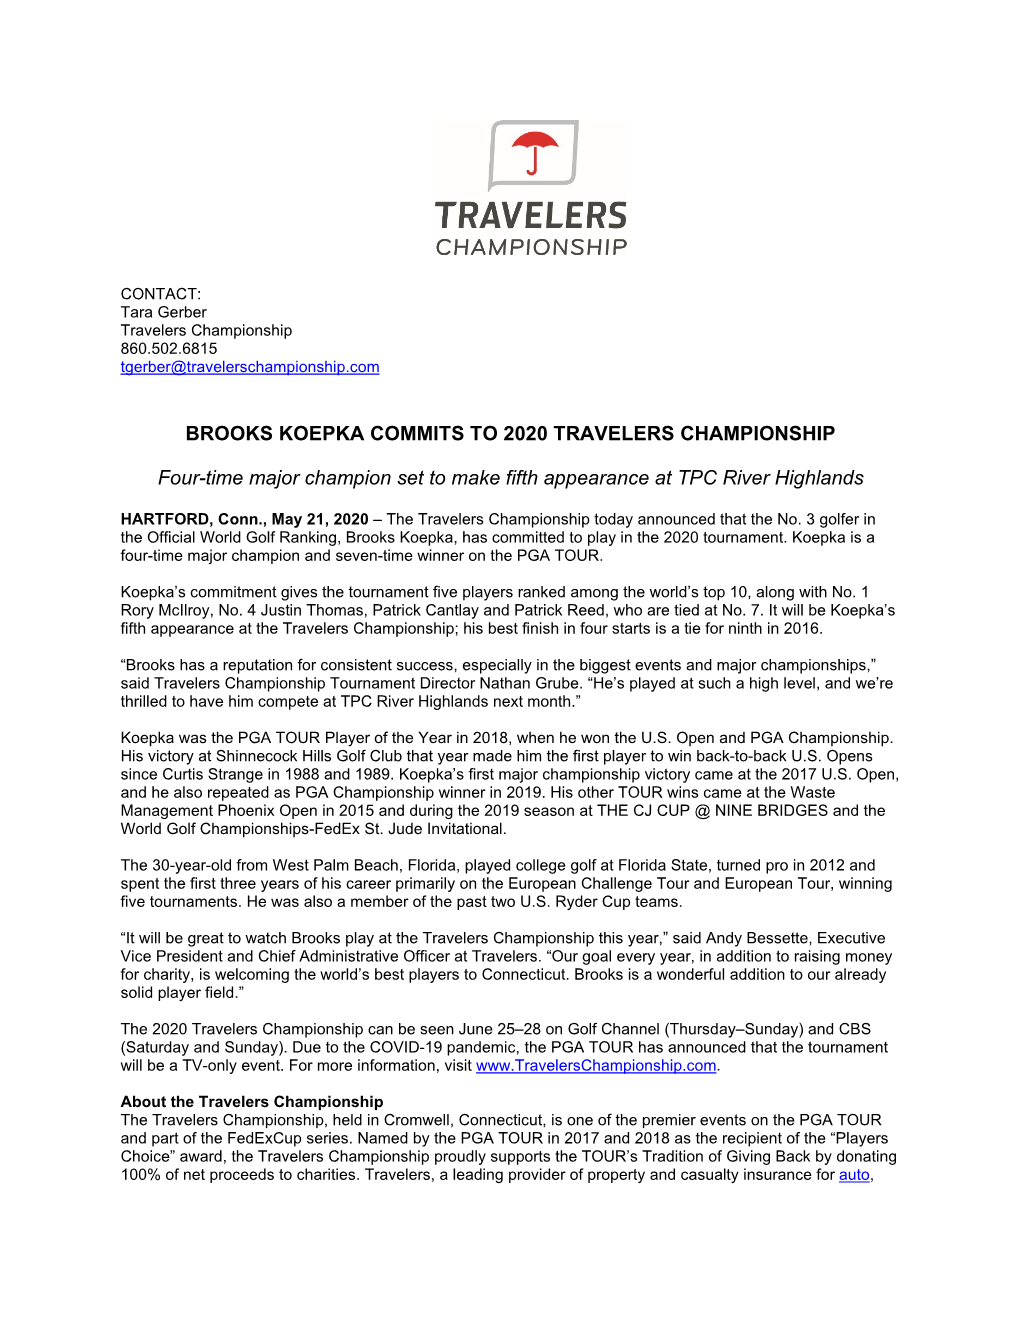 Brooks Koepka Commits to 2020 Travelers Championship